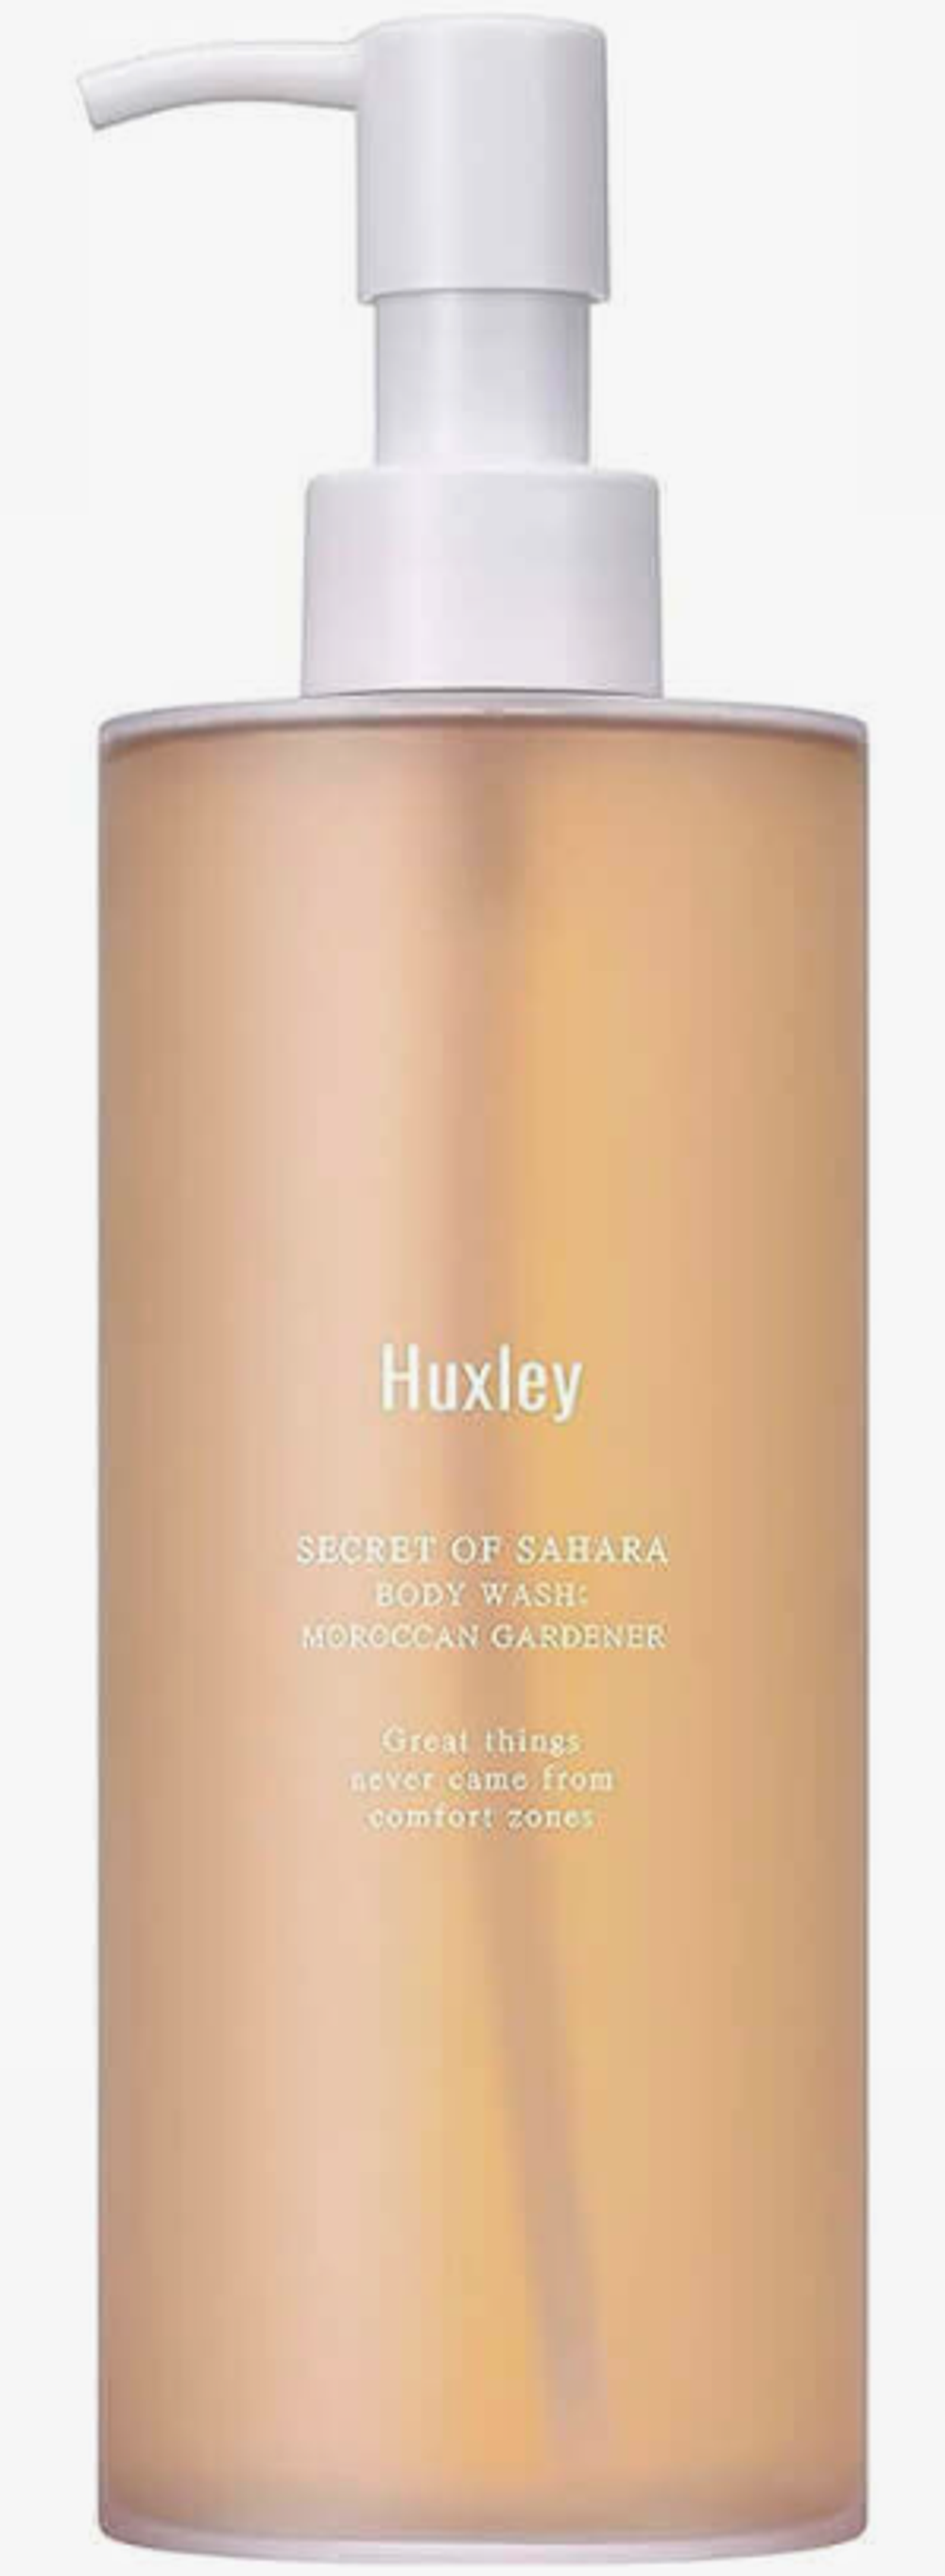 Huxley Secret of Sahara Body Wash: Moroccan Gardener увлажняющий гель для душа 300мл